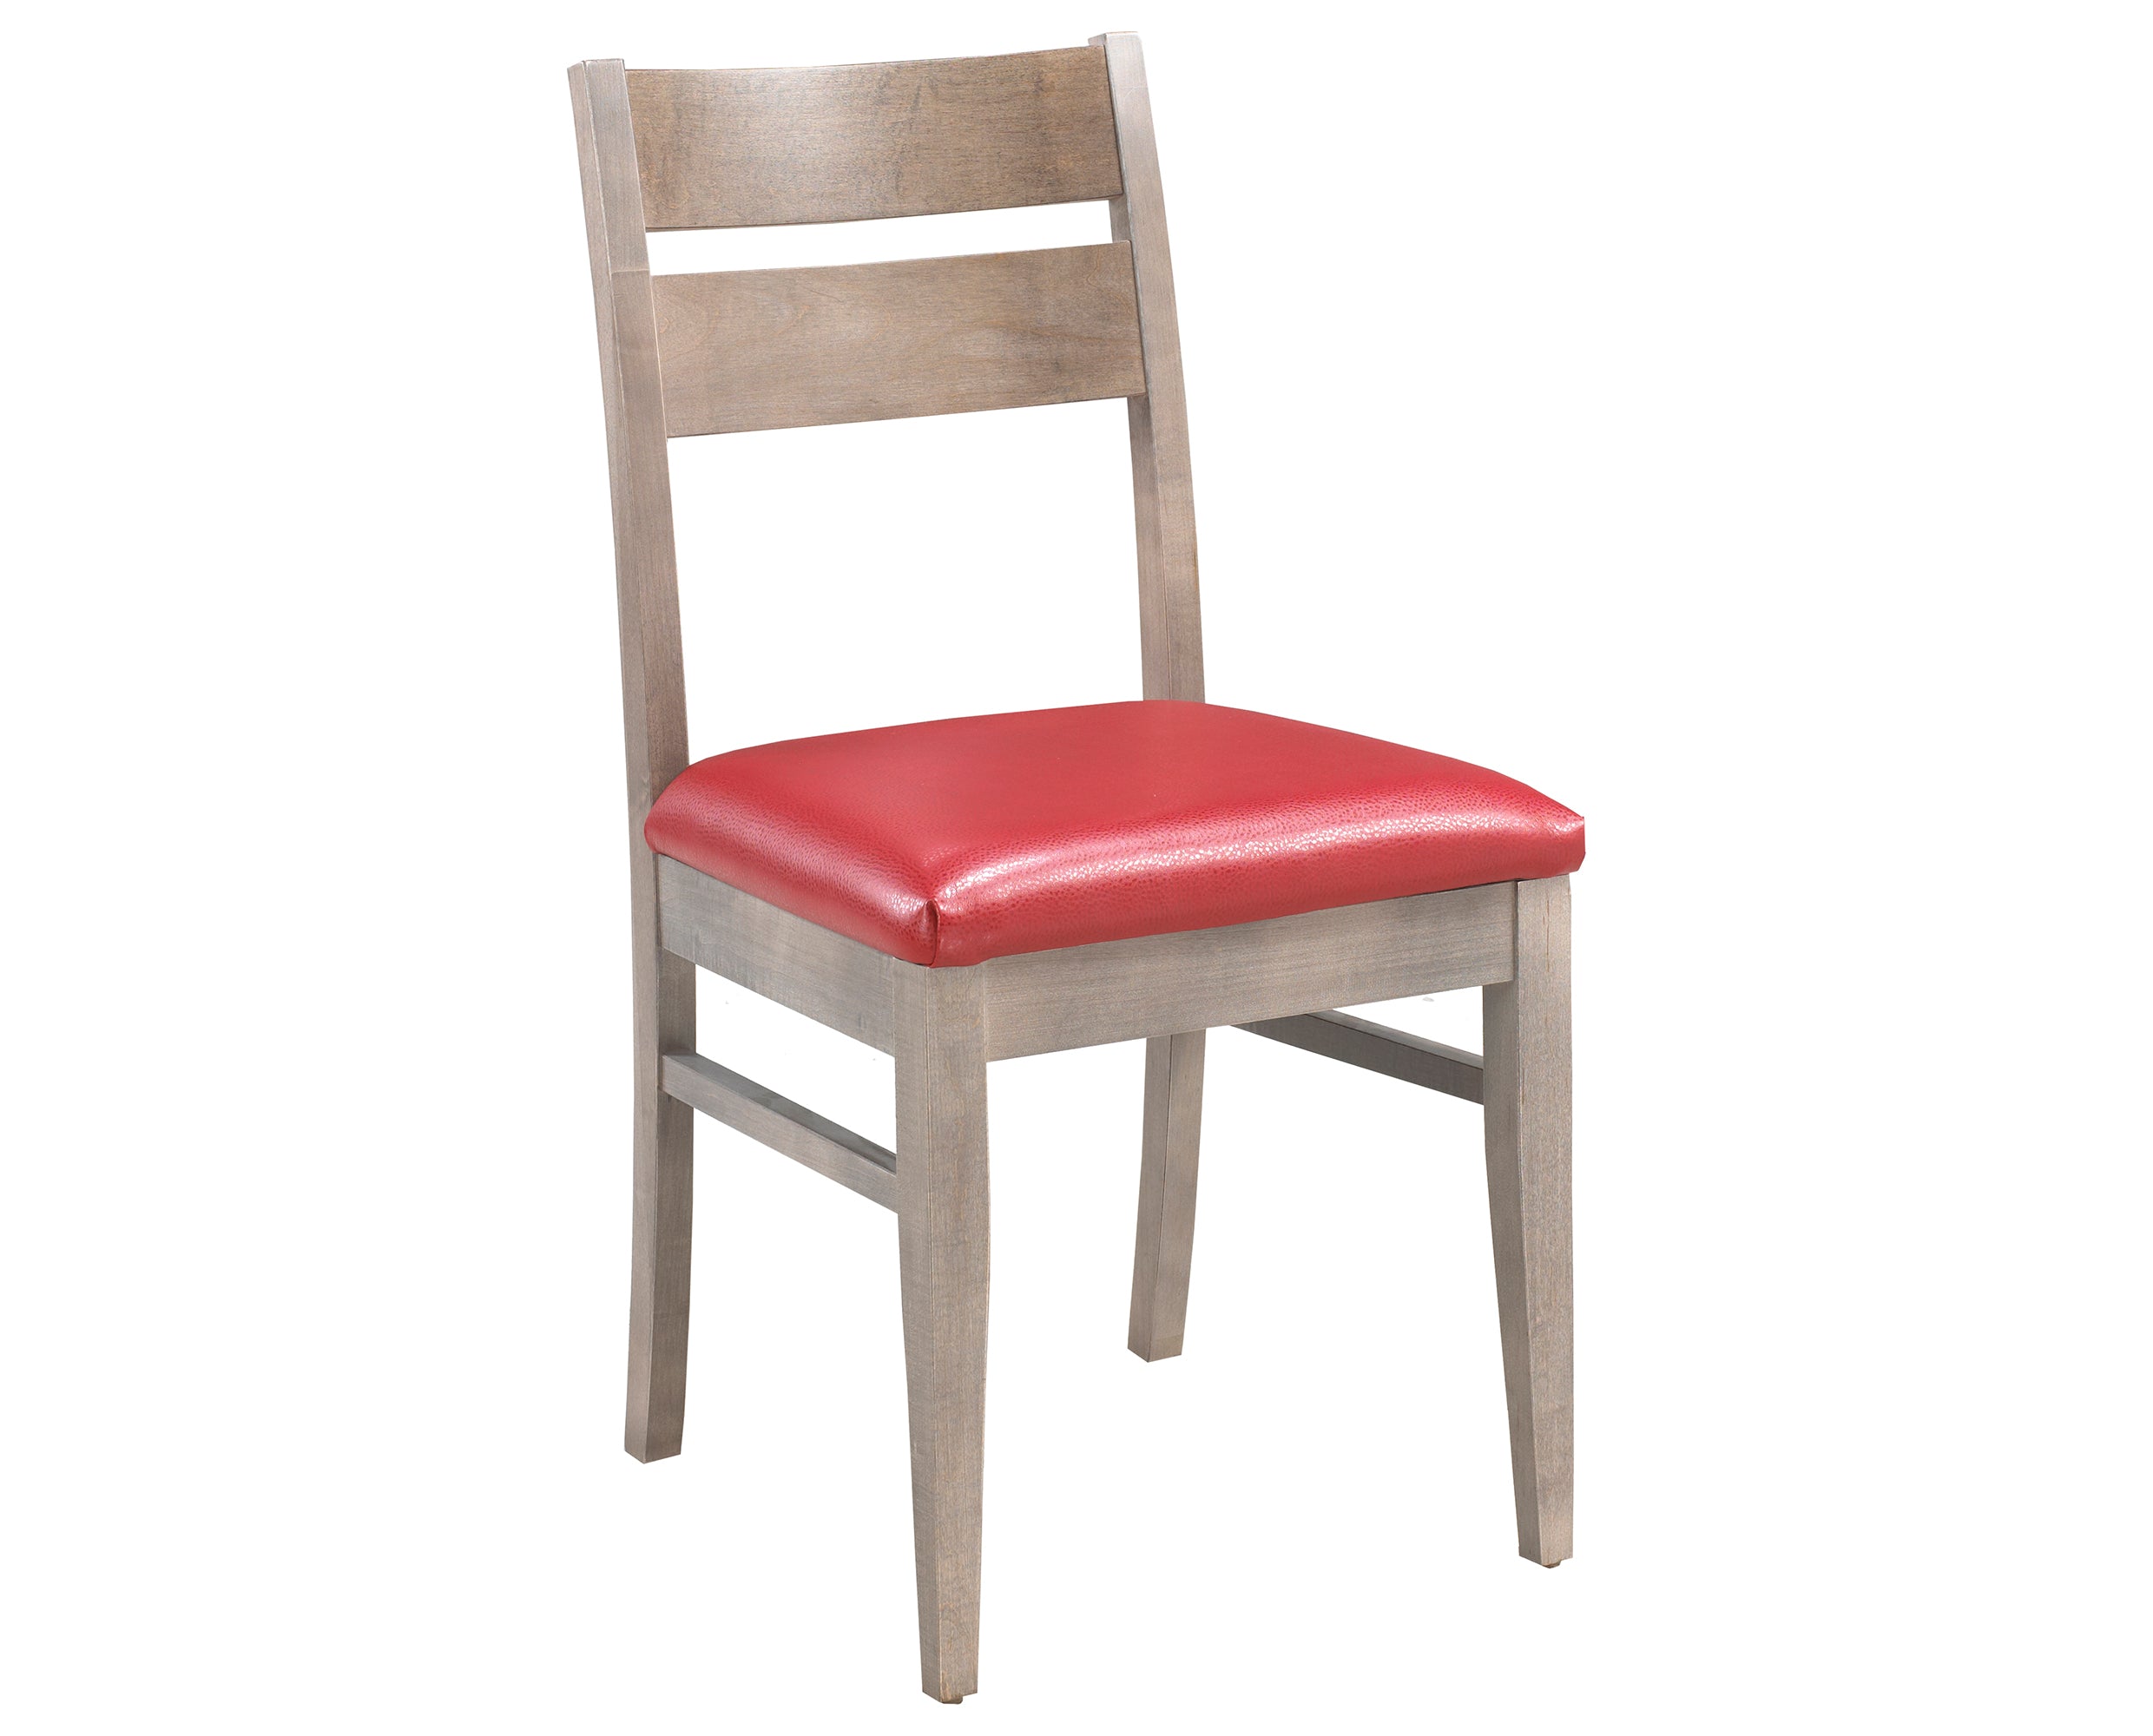 Chair as Shown | Cardinal Woodcraft Harvard Dining Chair | Valley Ridge Furniture